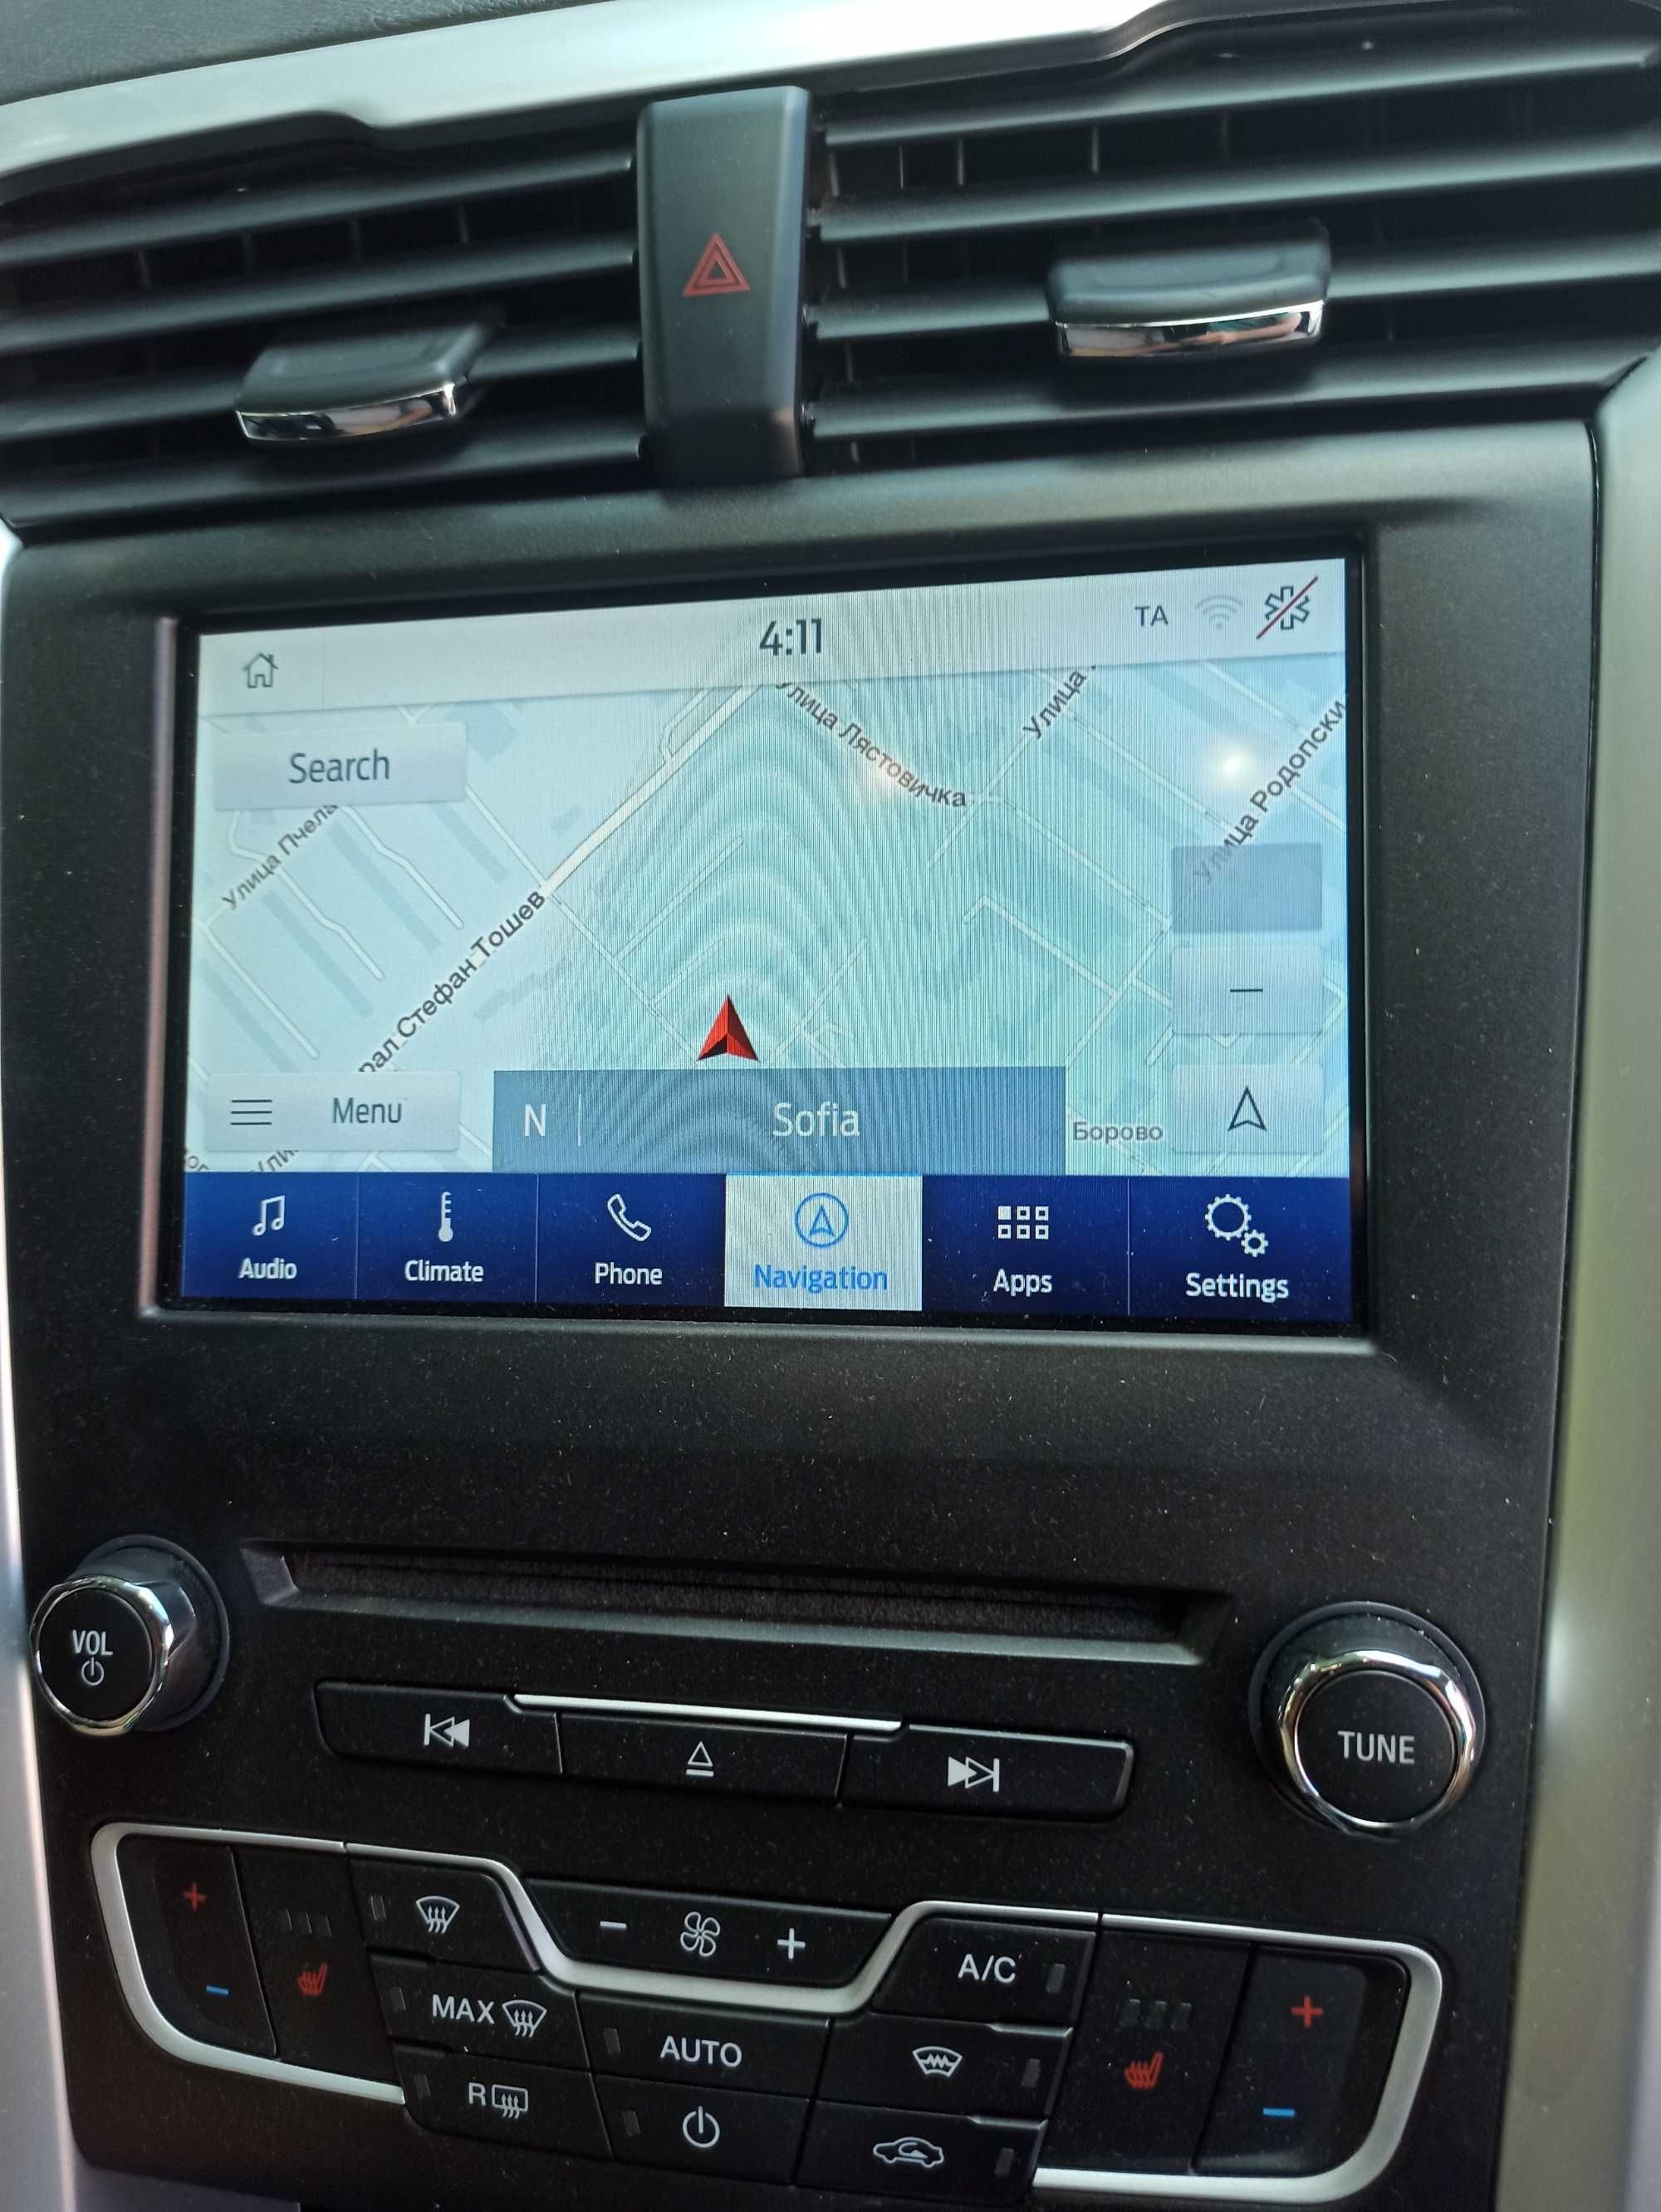 2023 FORD SYNC 3 карта Форд Lincoln USA CANADA EU BG ъпдейт навигация